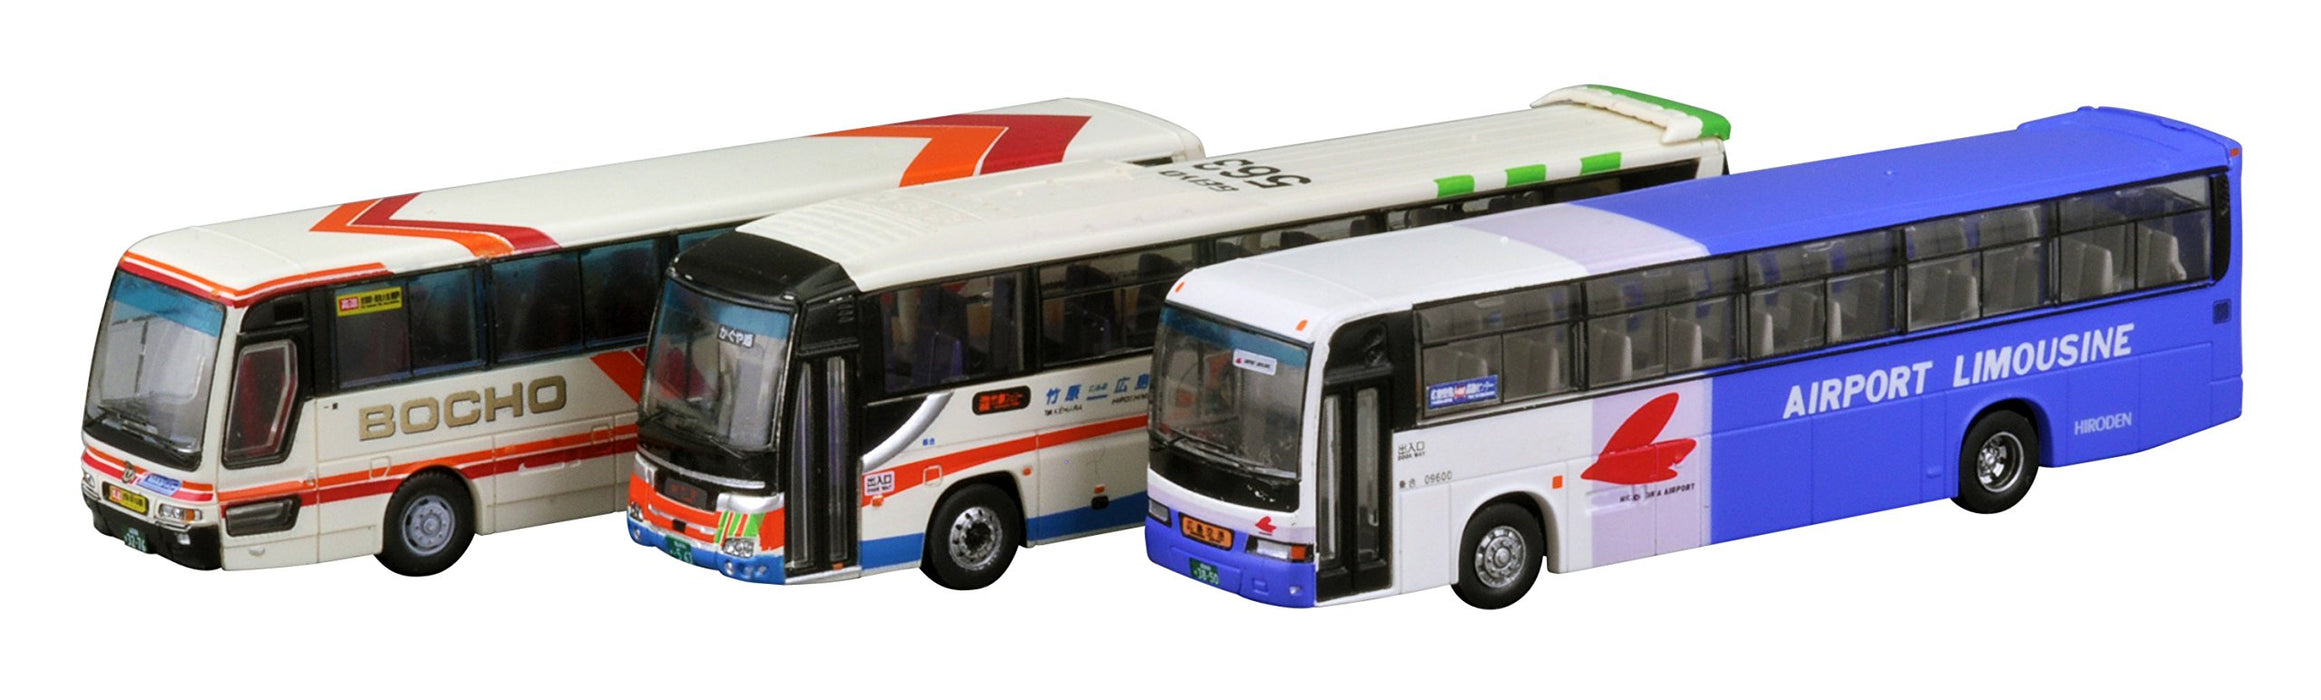 Tomytec Hiroshima Bus Center Set B Collection de bus Diorama en édition limitée